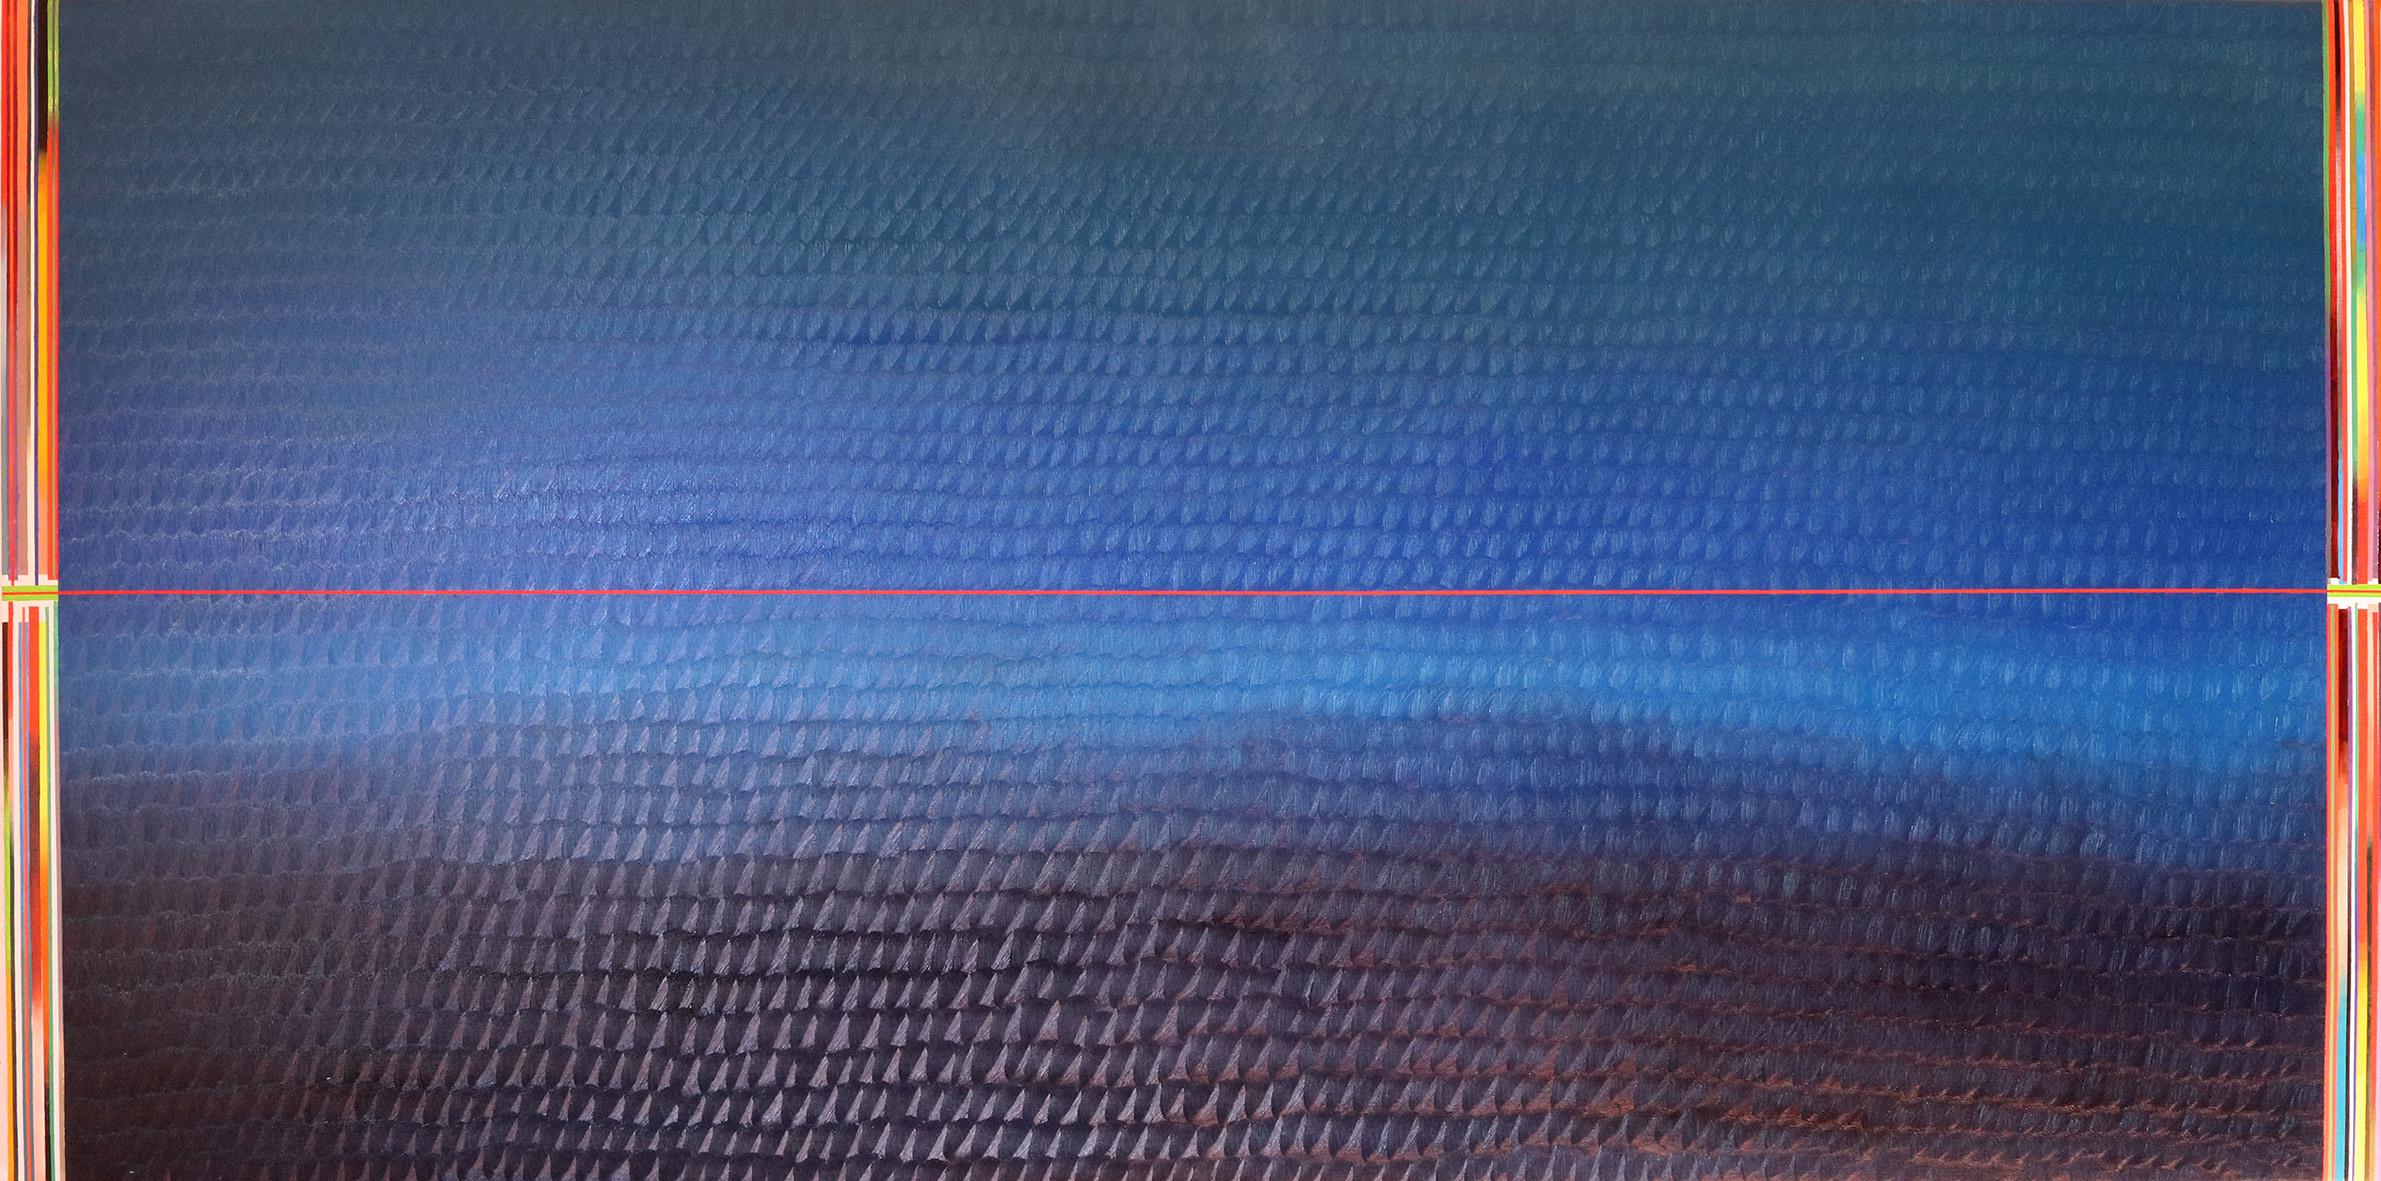 Redline horizon (v 7.0) (100x200cm) 2019 (private collection, New York)